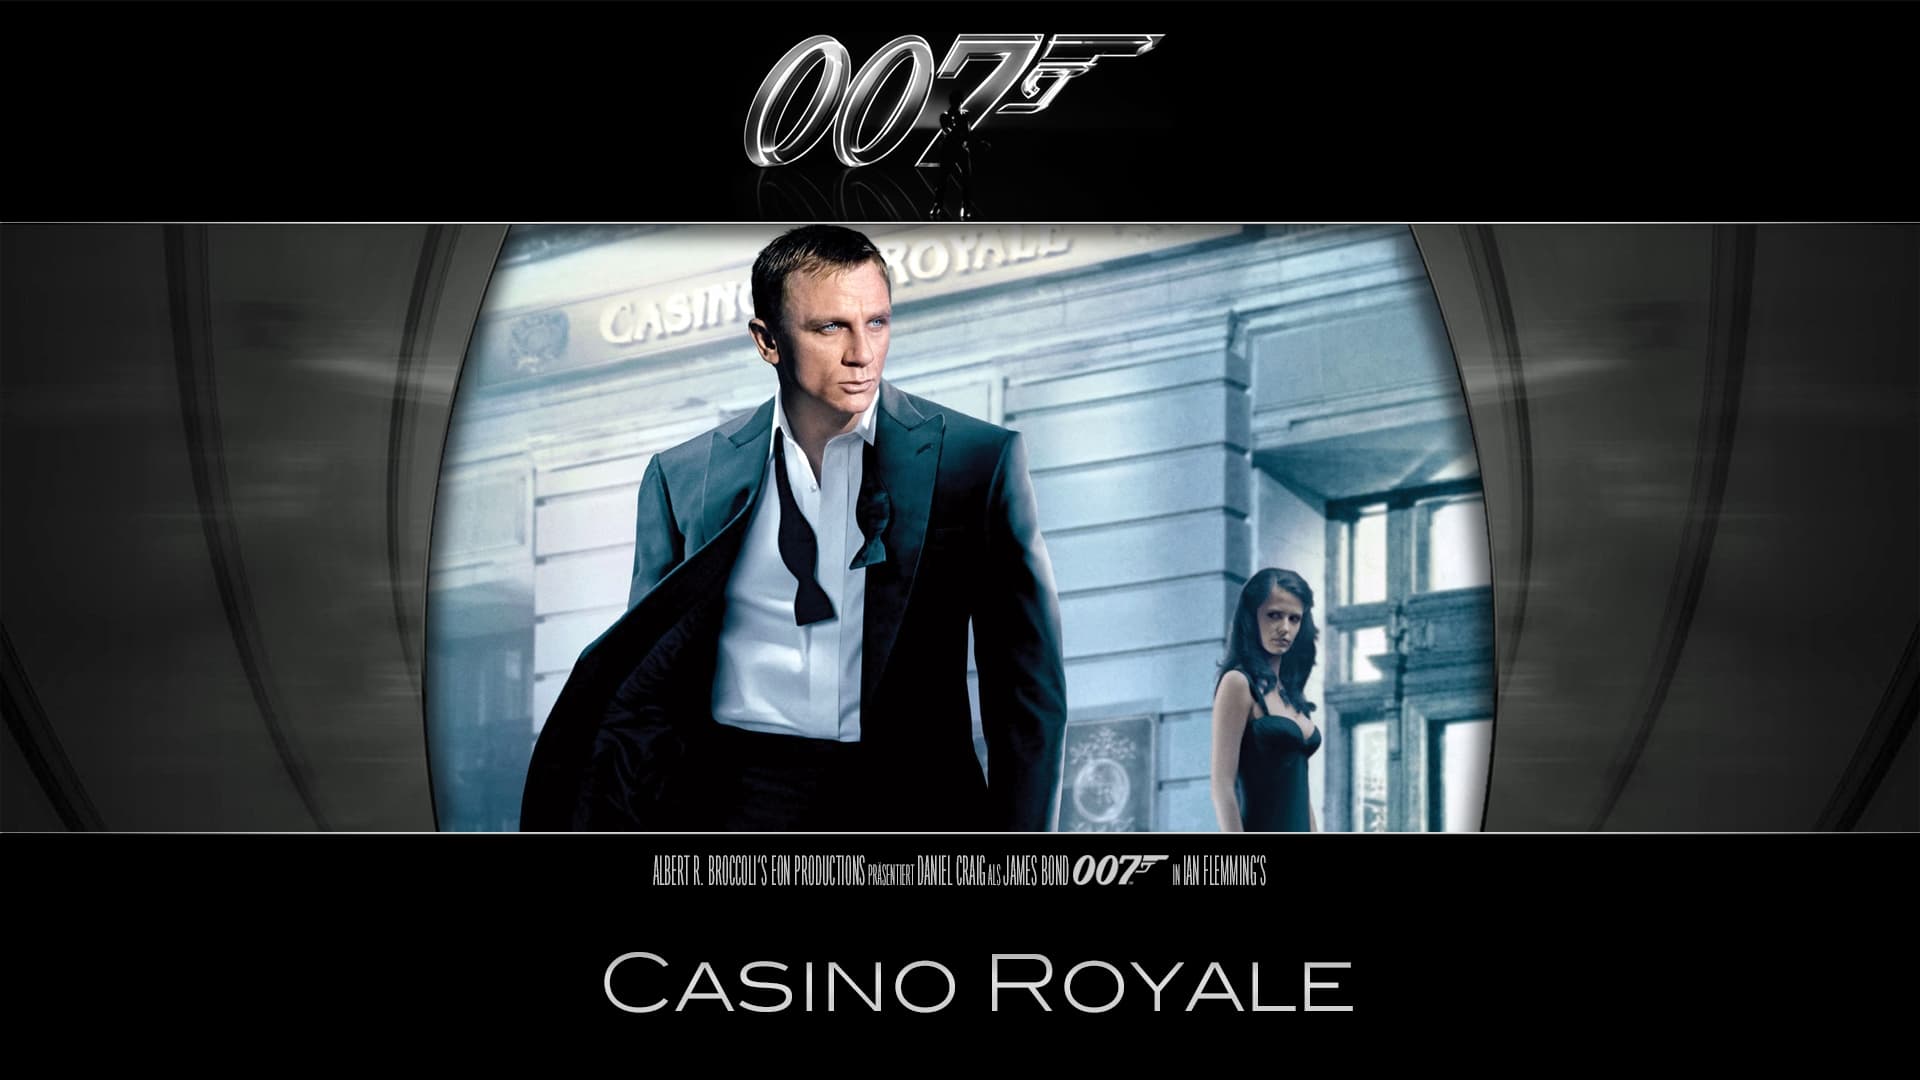 Casino royale movie online free скачать бесплатно на ios фонбет